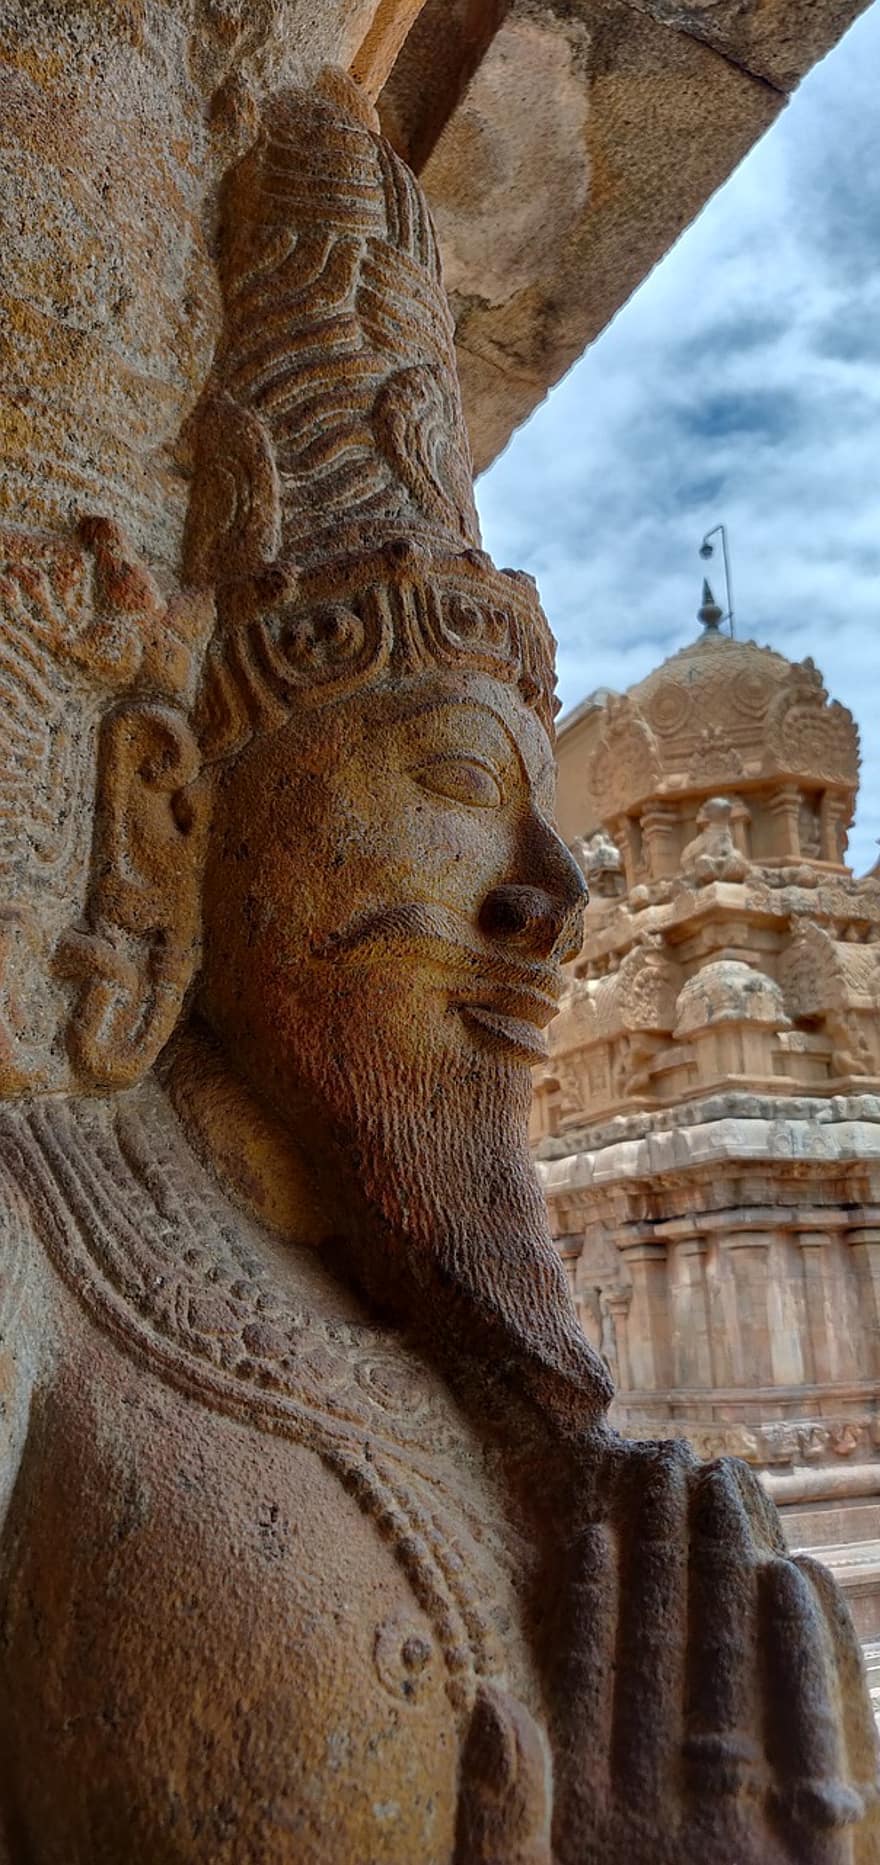 Architecture, Sculpture, Statue, India, Tamilnadu, Historical, Temple, Shiva, Big Temple, Thanjavur, cultures